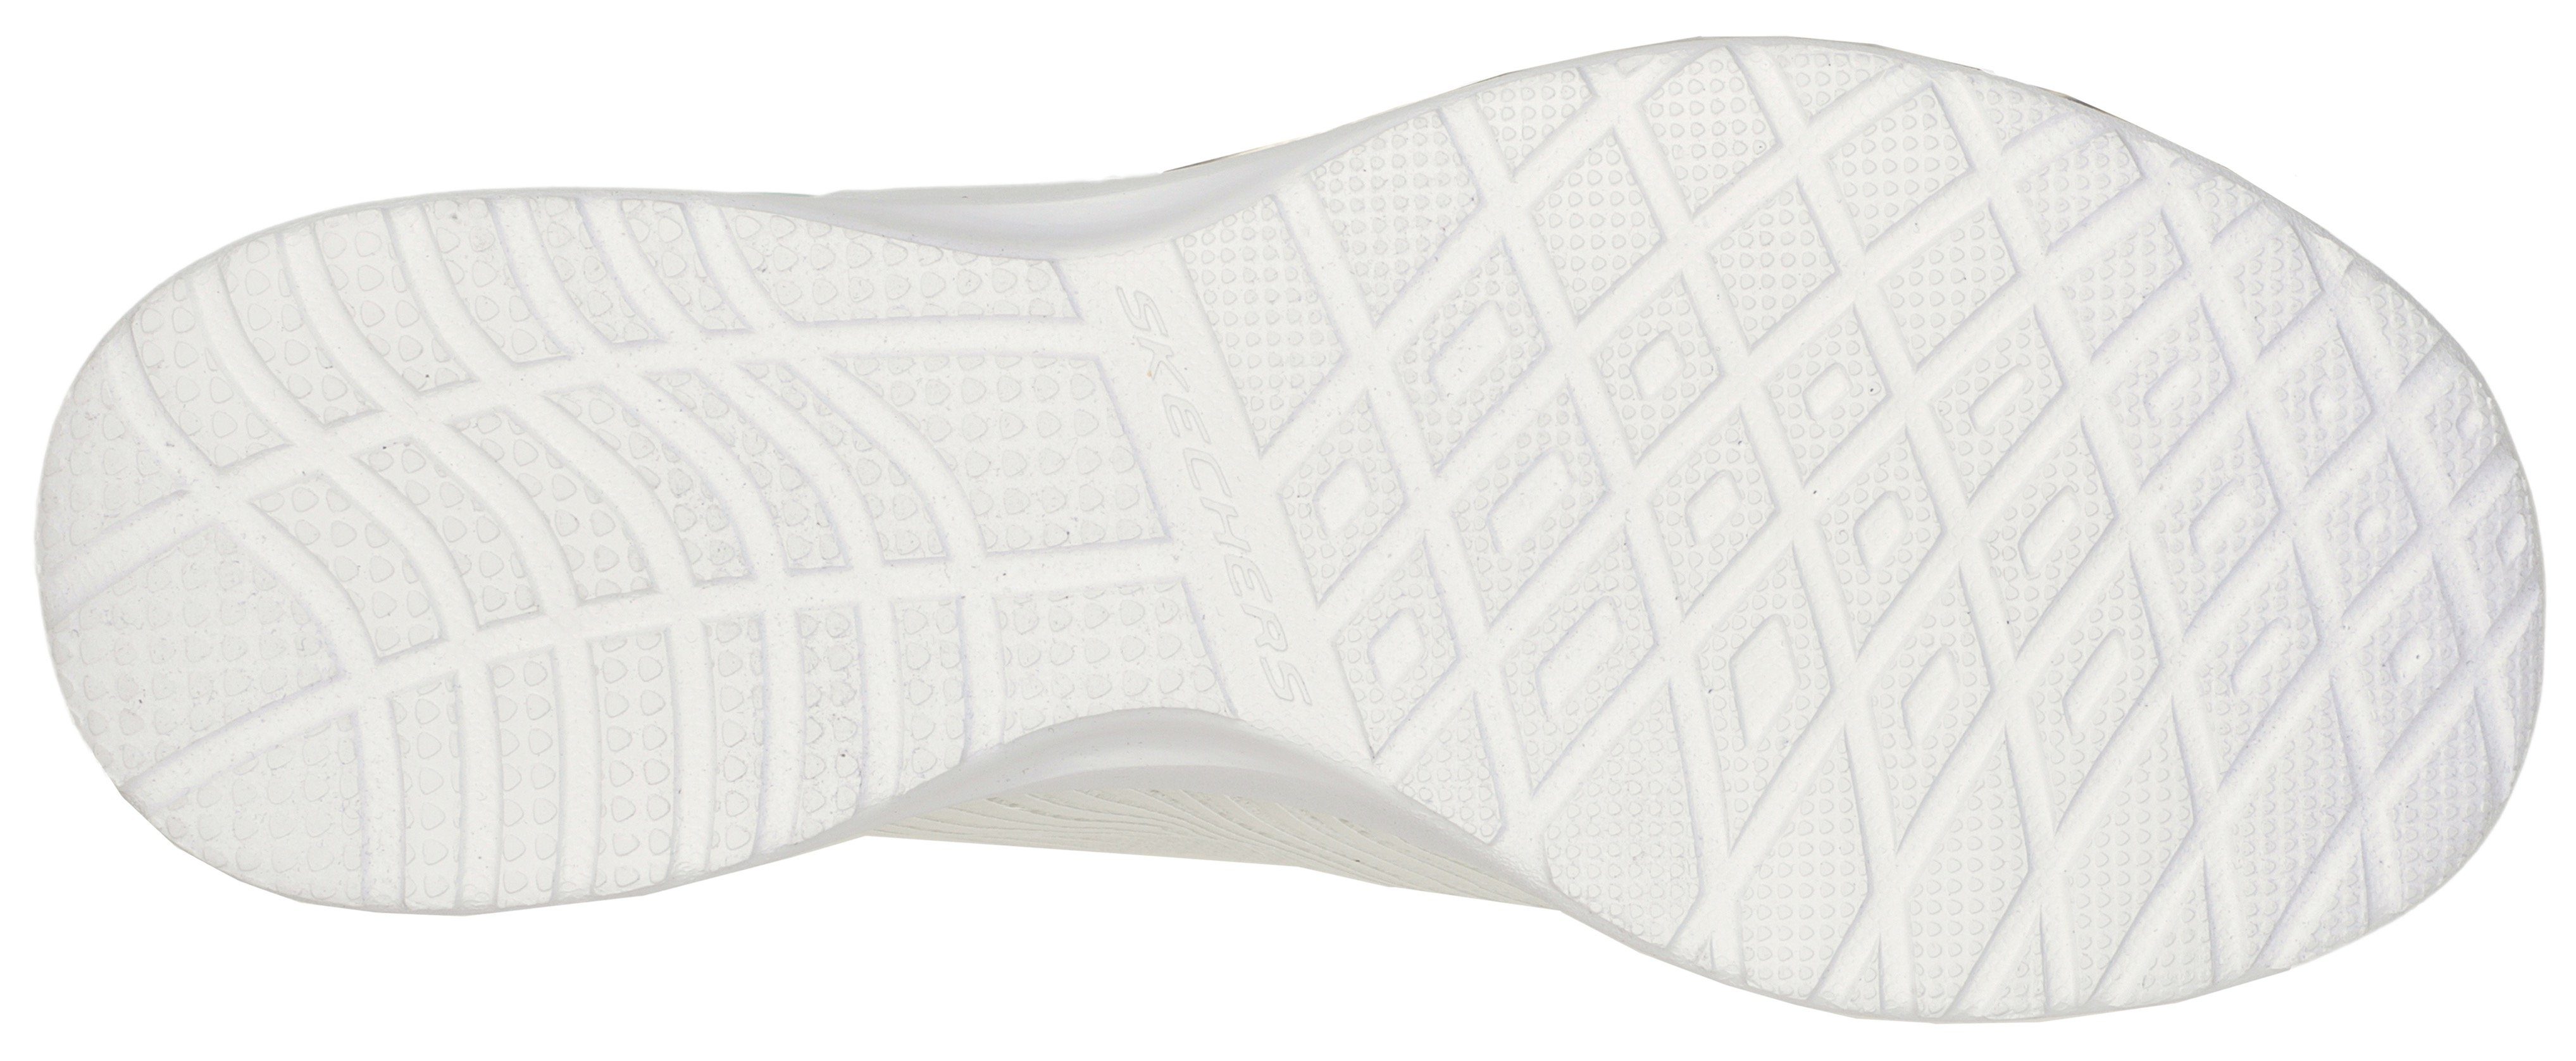 Ausstattung DYNAMIGHT Foam Memory SKECH-AIR Skechers mit weiß-mint LUMINOSITY Sneaker